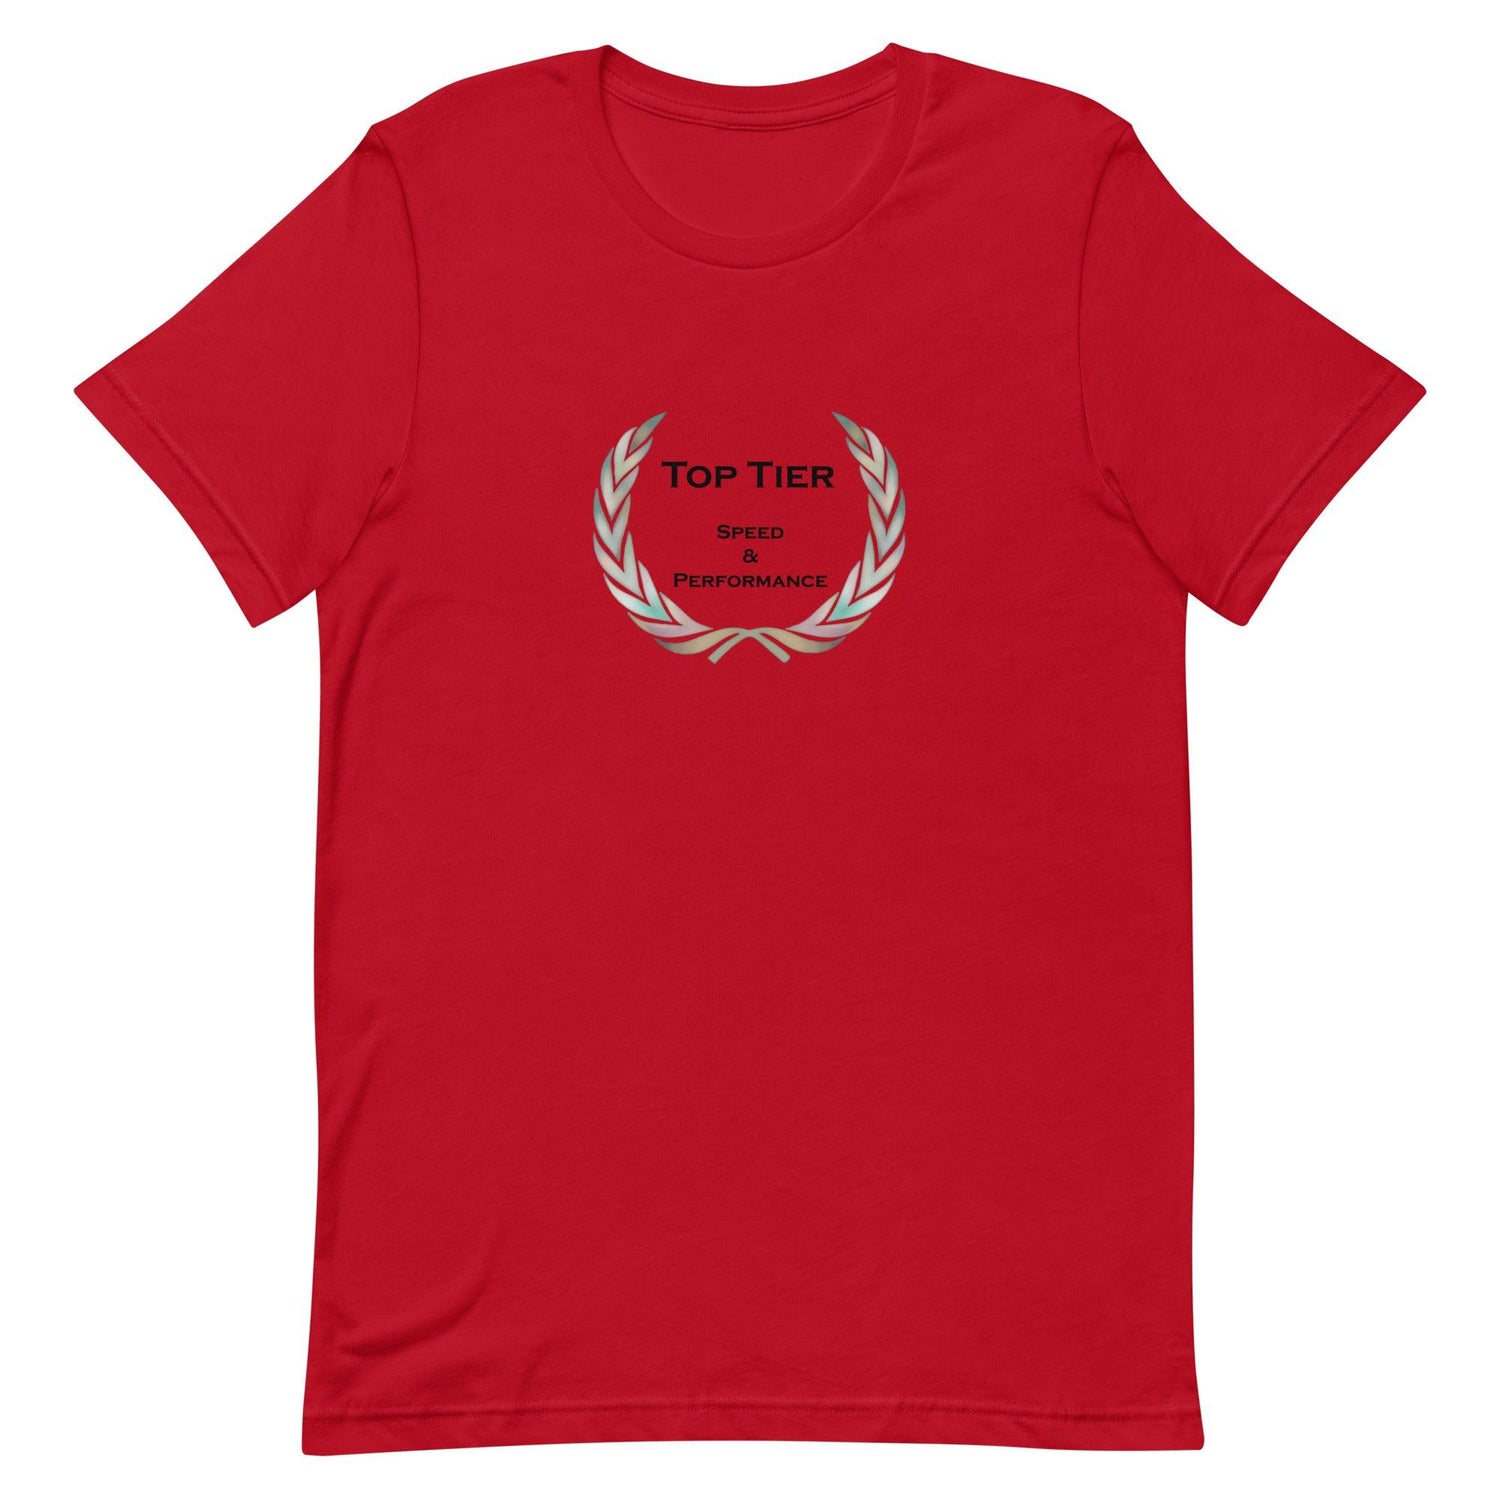 Muna Lee "Top Tier" t-shirt - Fan Arch